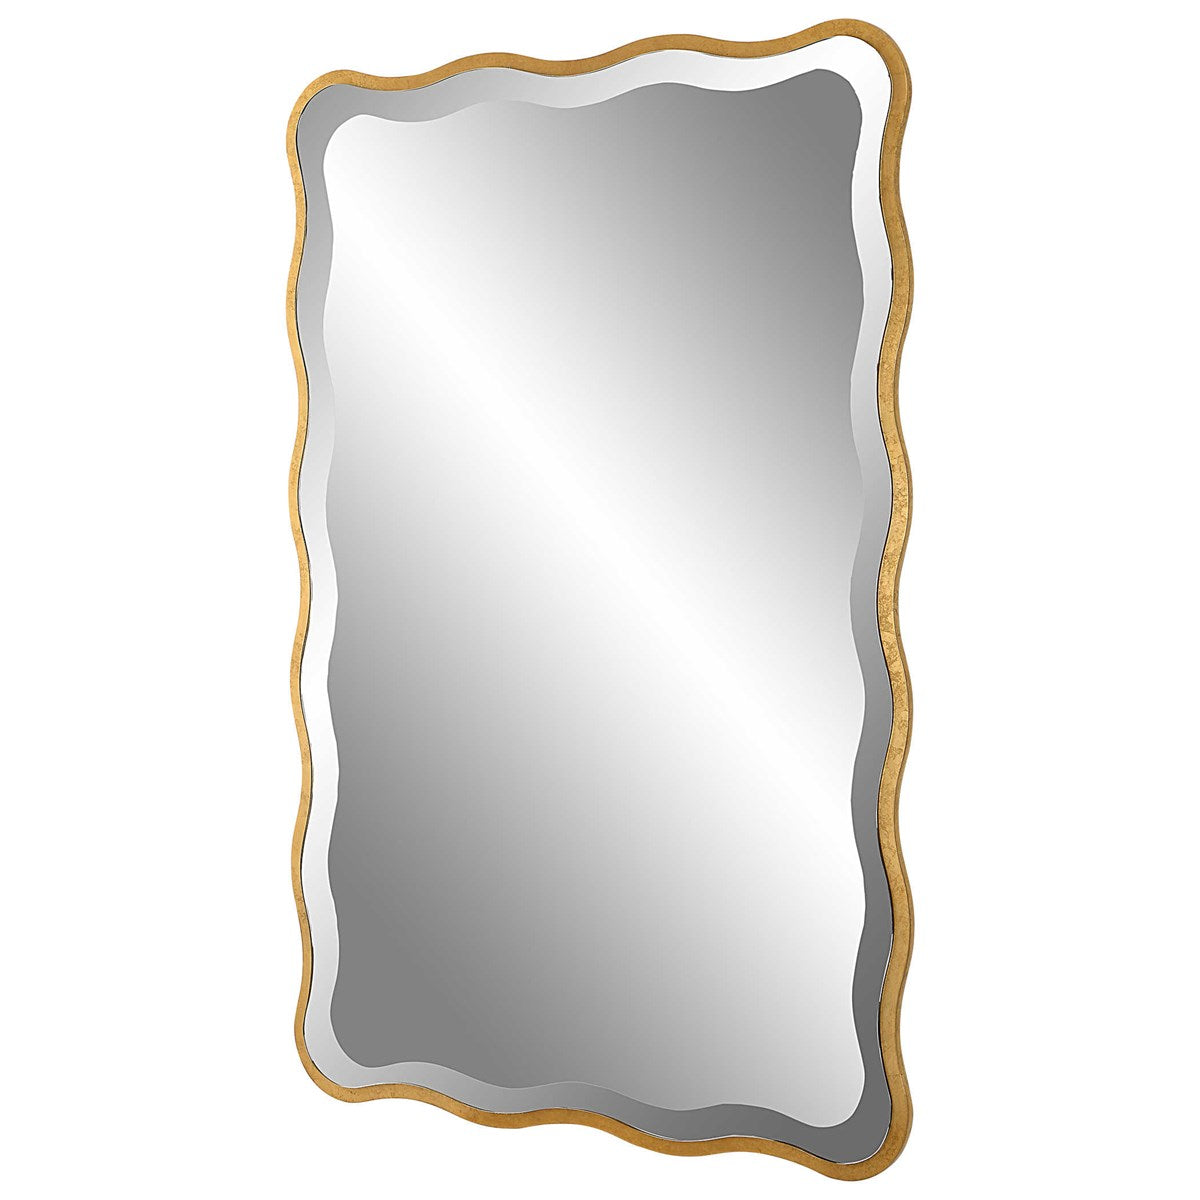 Scalloped gold mirror